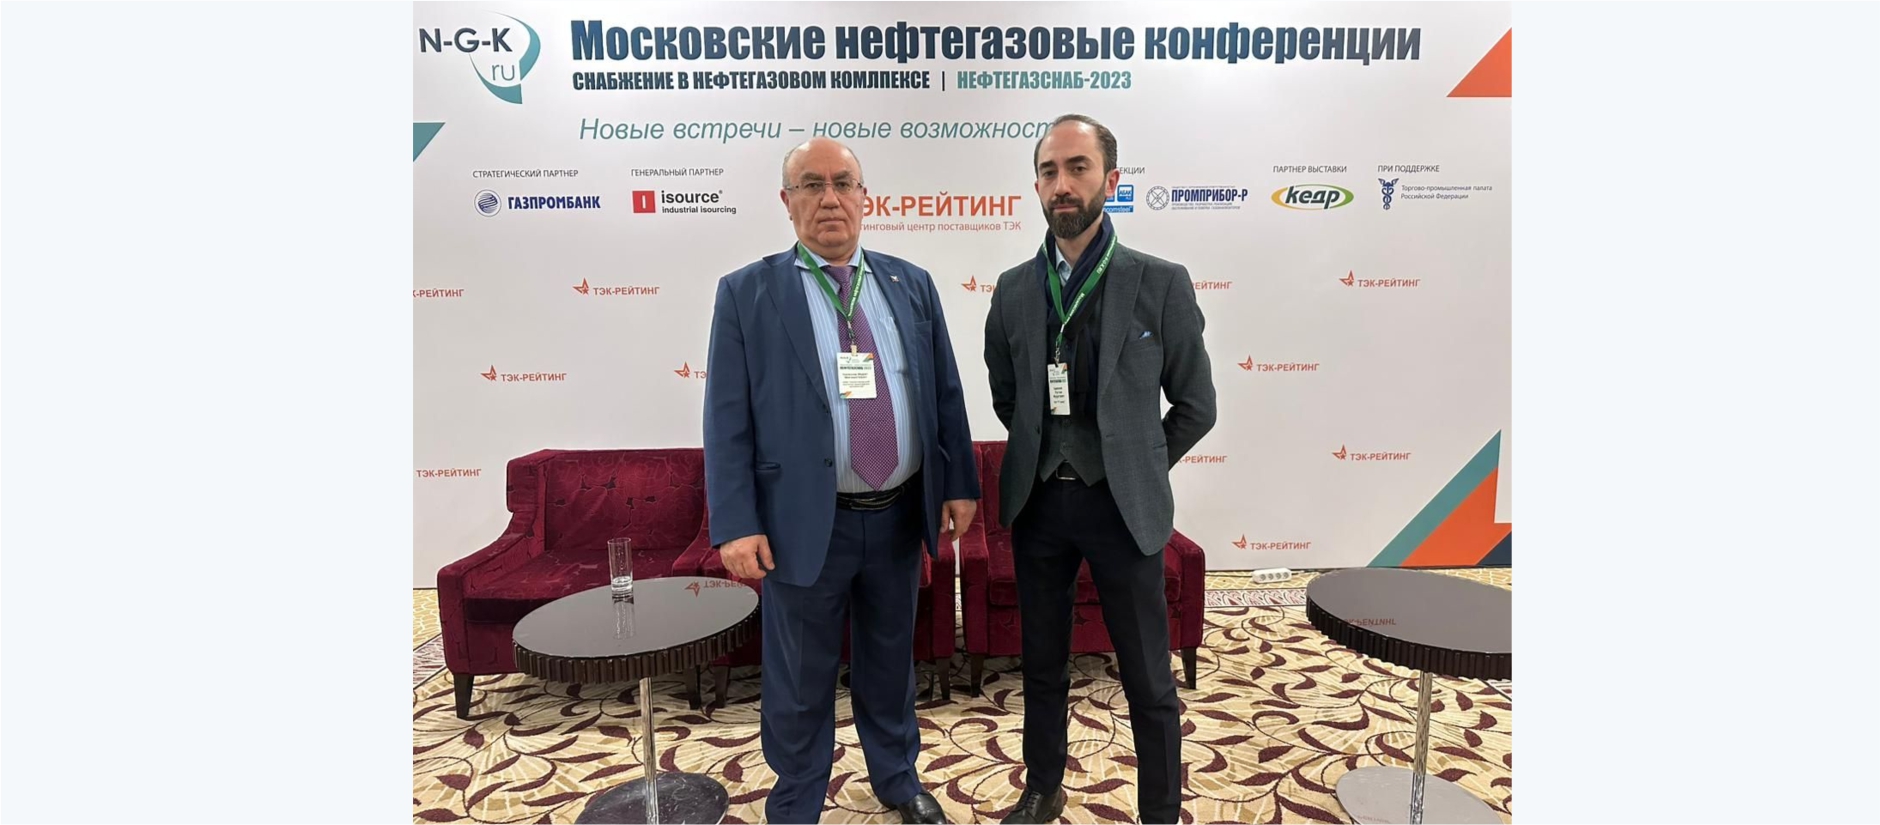 Nizhny Novgorod Institute of Applied Technologies took part in the XVII annual conference NEFTEGAZSNAB-2023